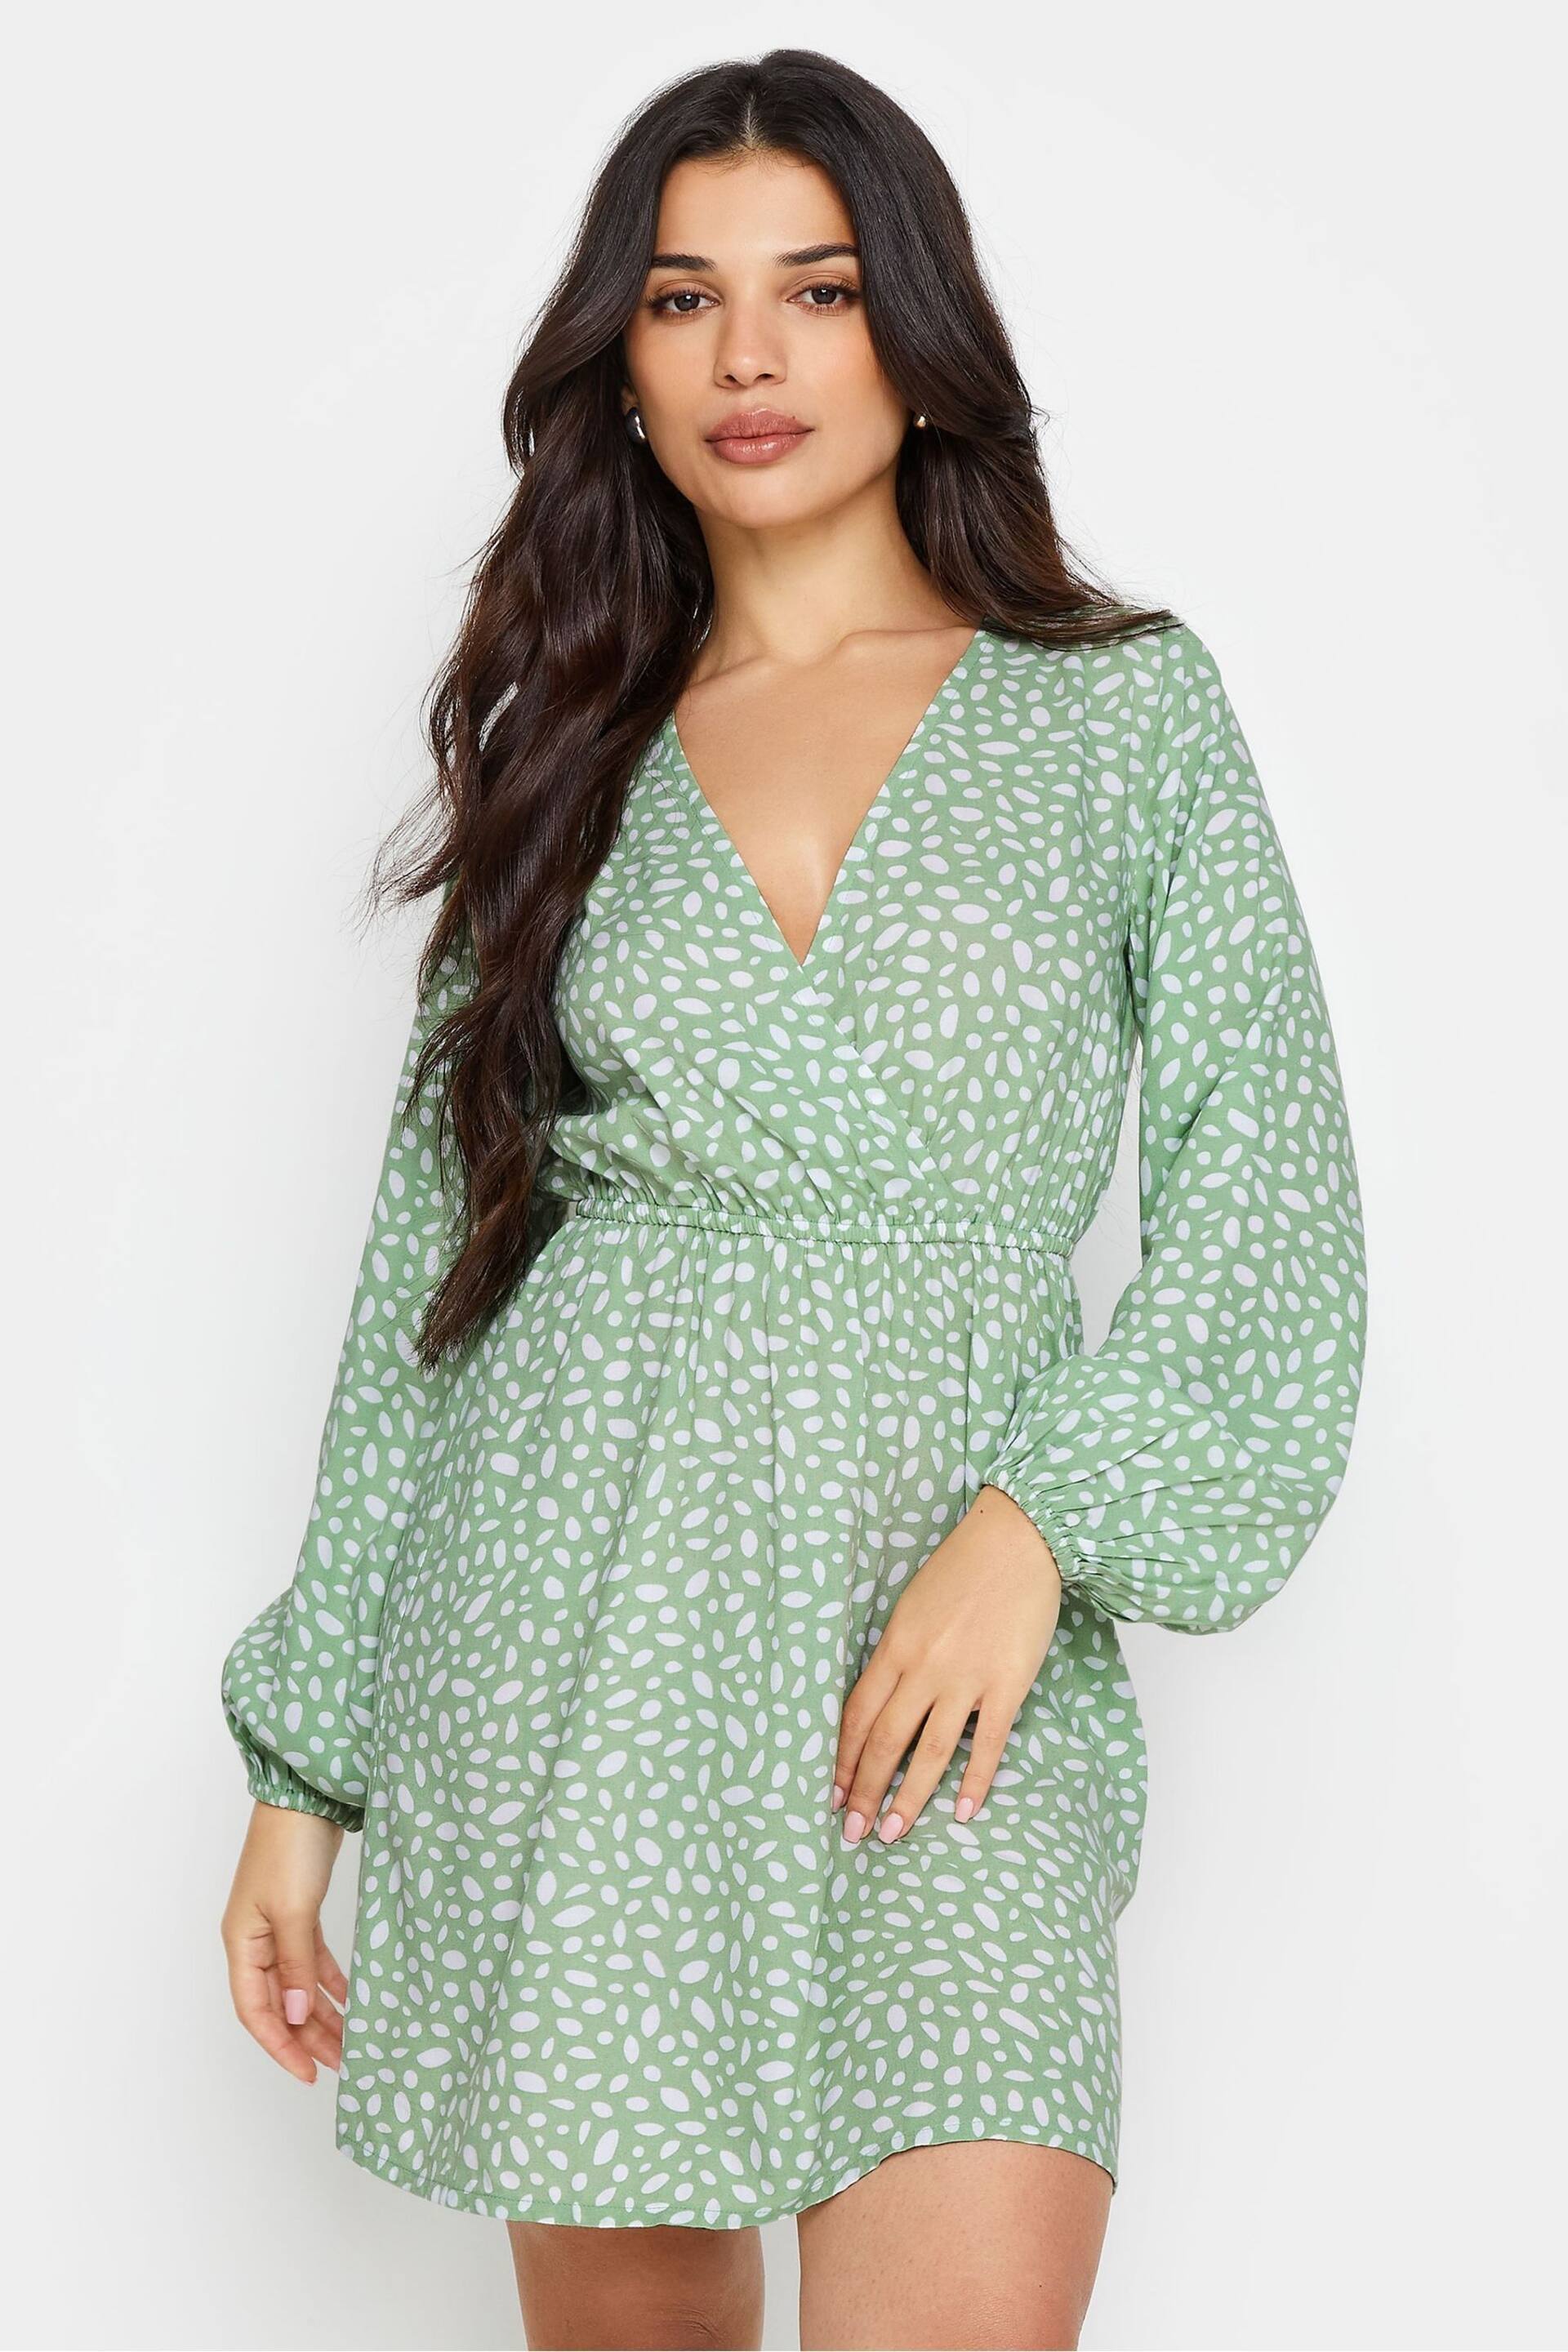 PixieGirl Petite Green Wrap Dress - Image 1 of 5